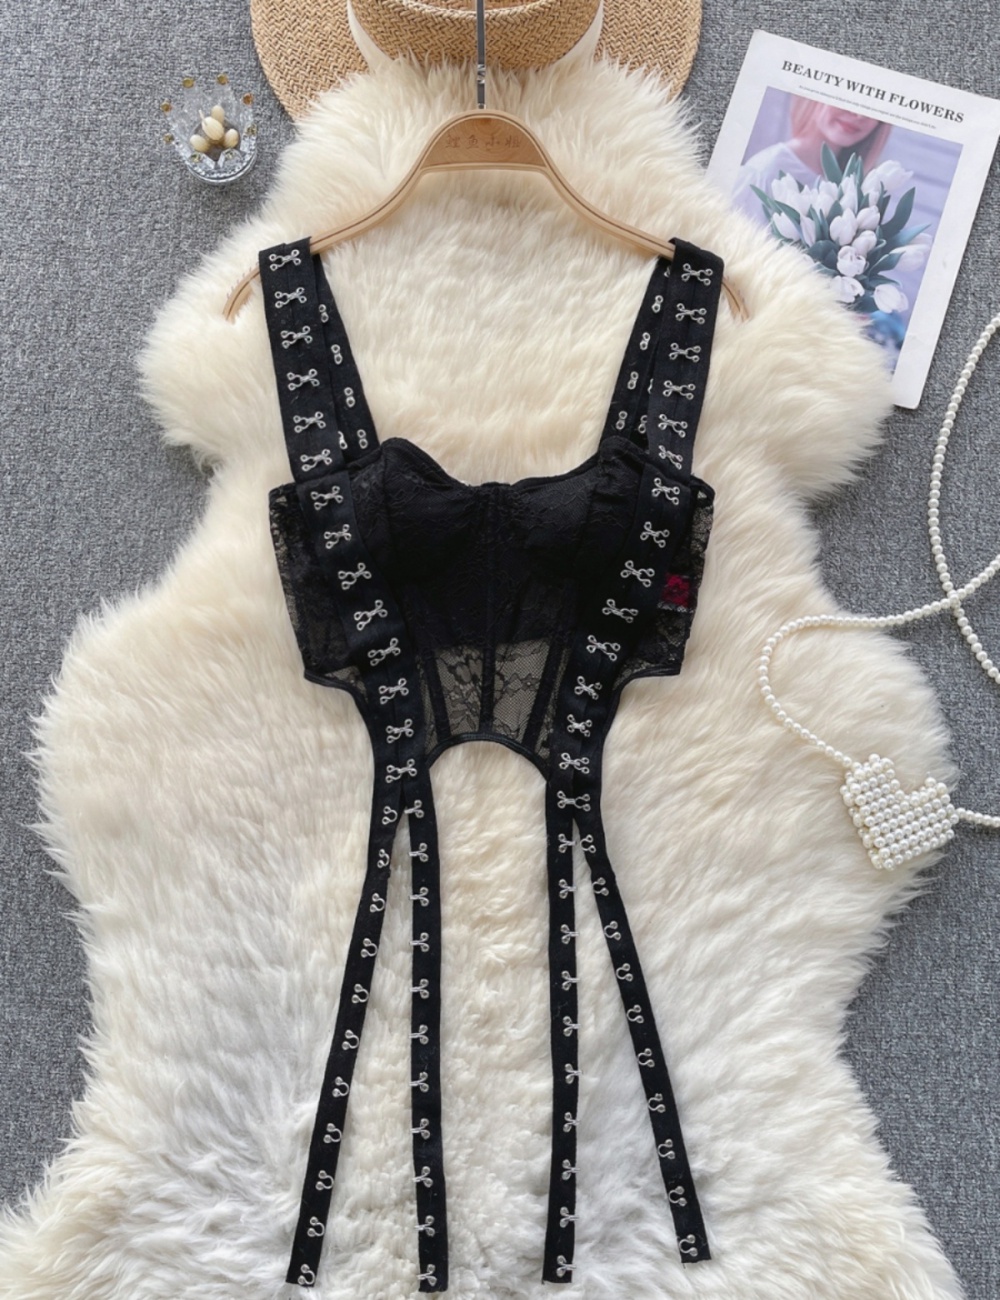 Spicegirl sling lace tops short European style corset